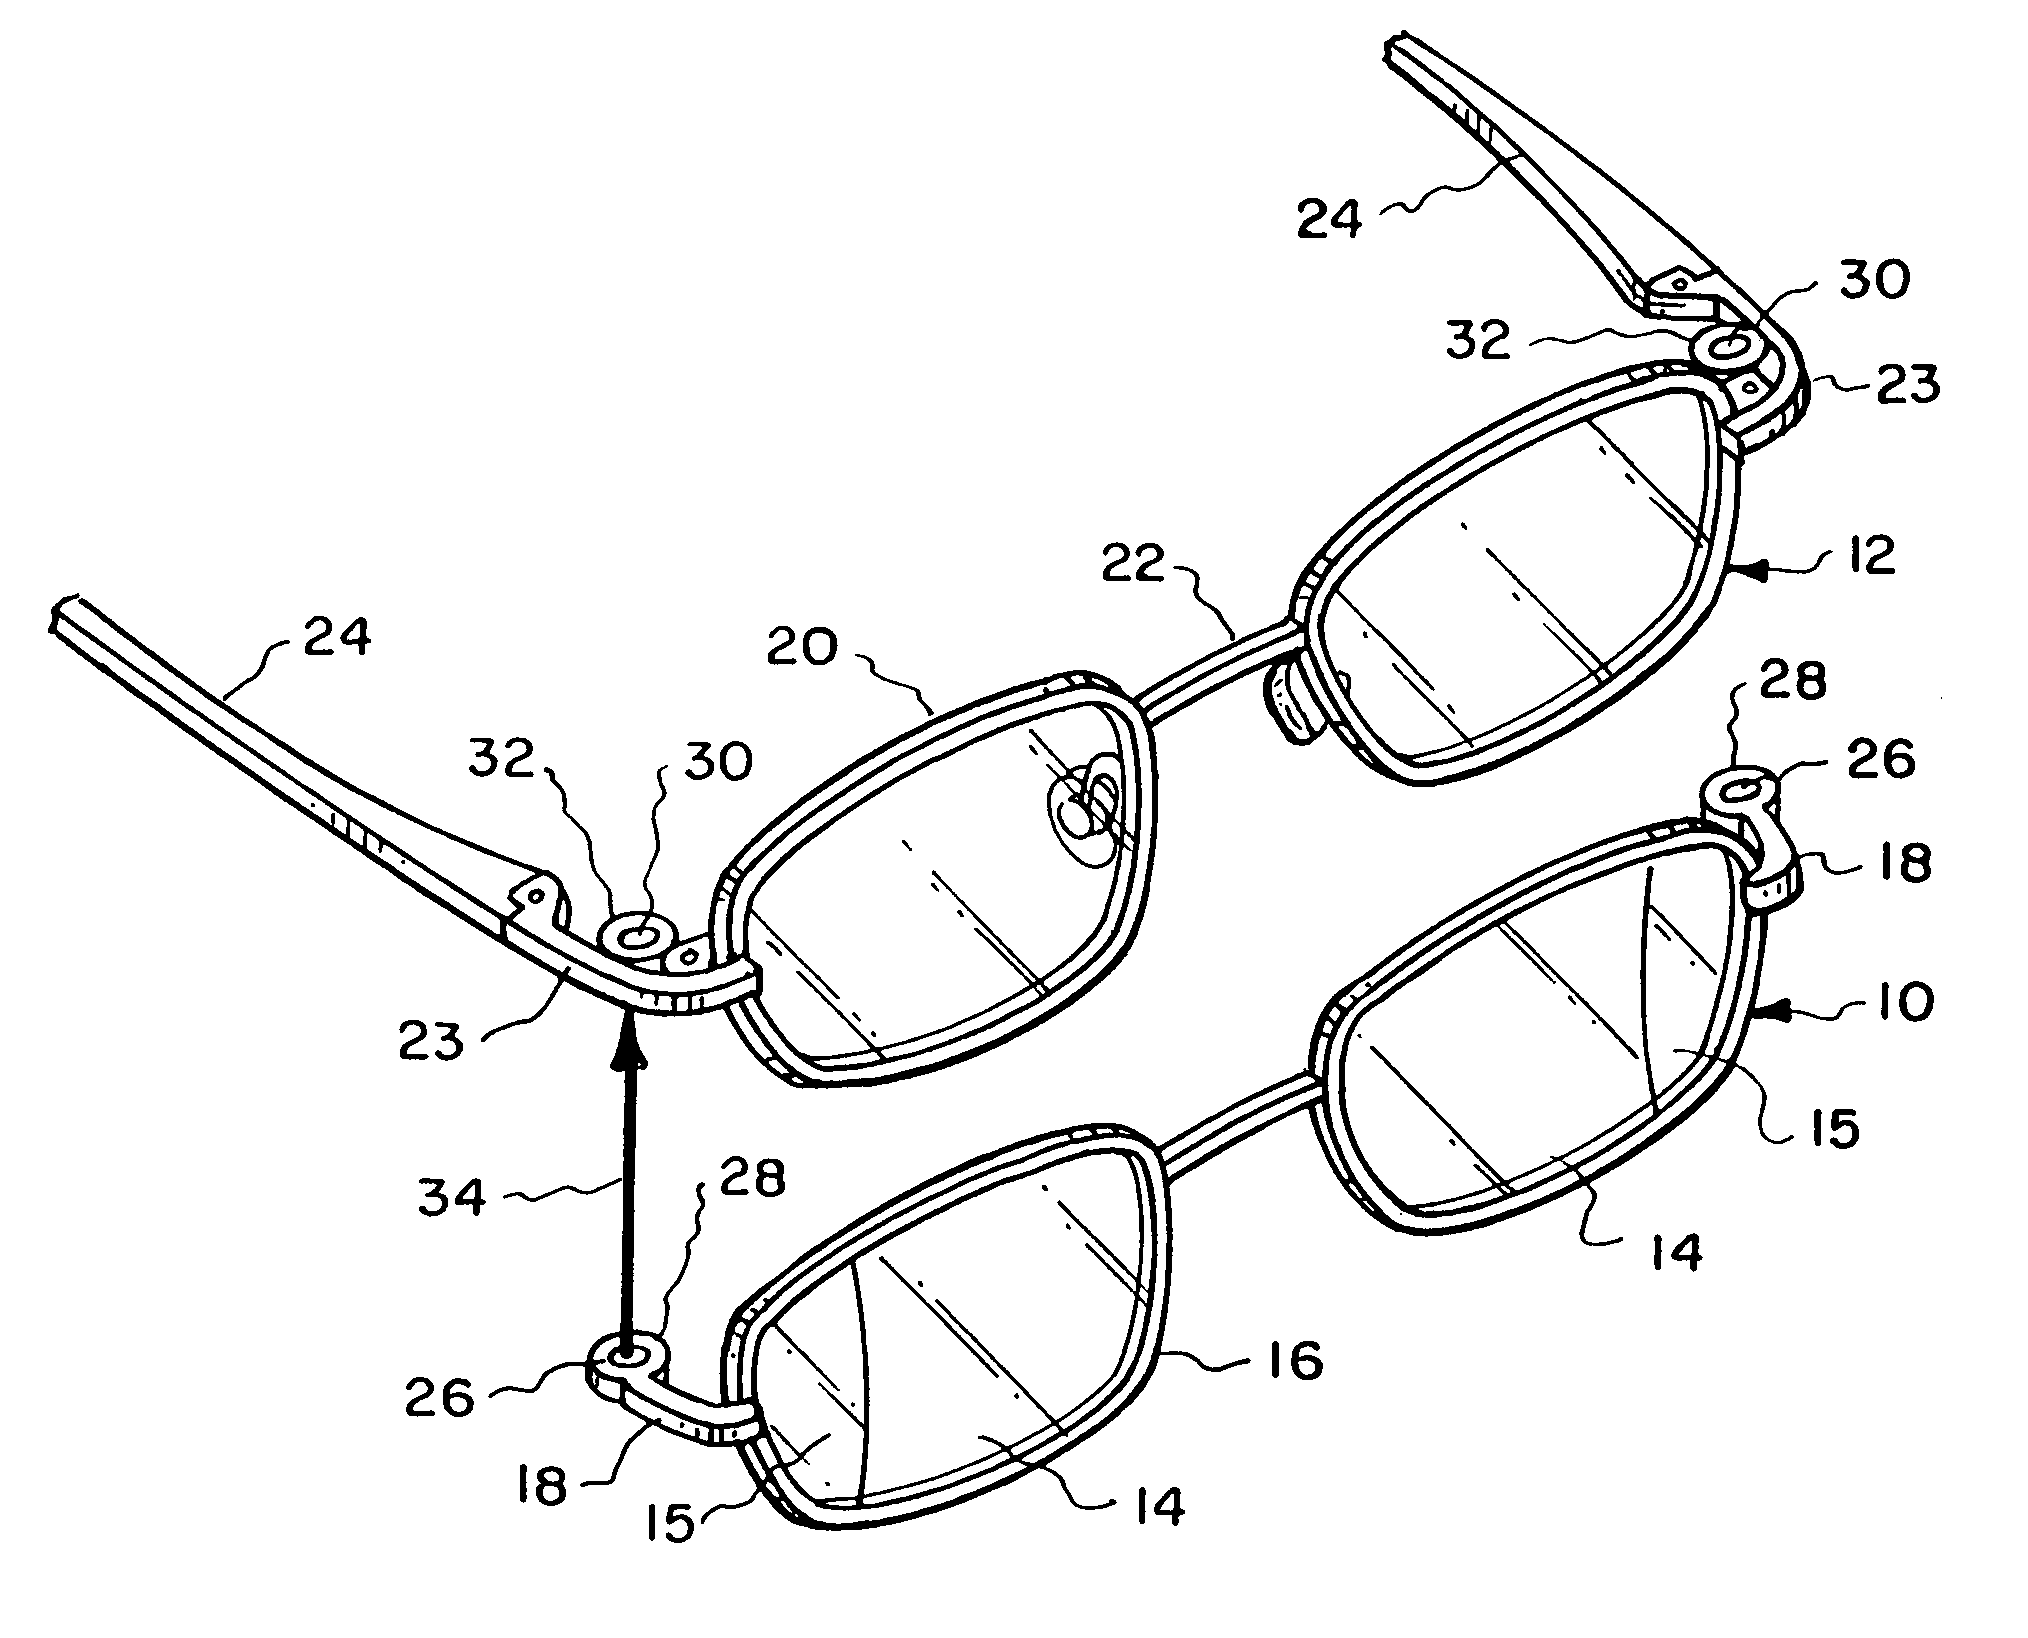 Auxiliary eyewear attachment apparatus